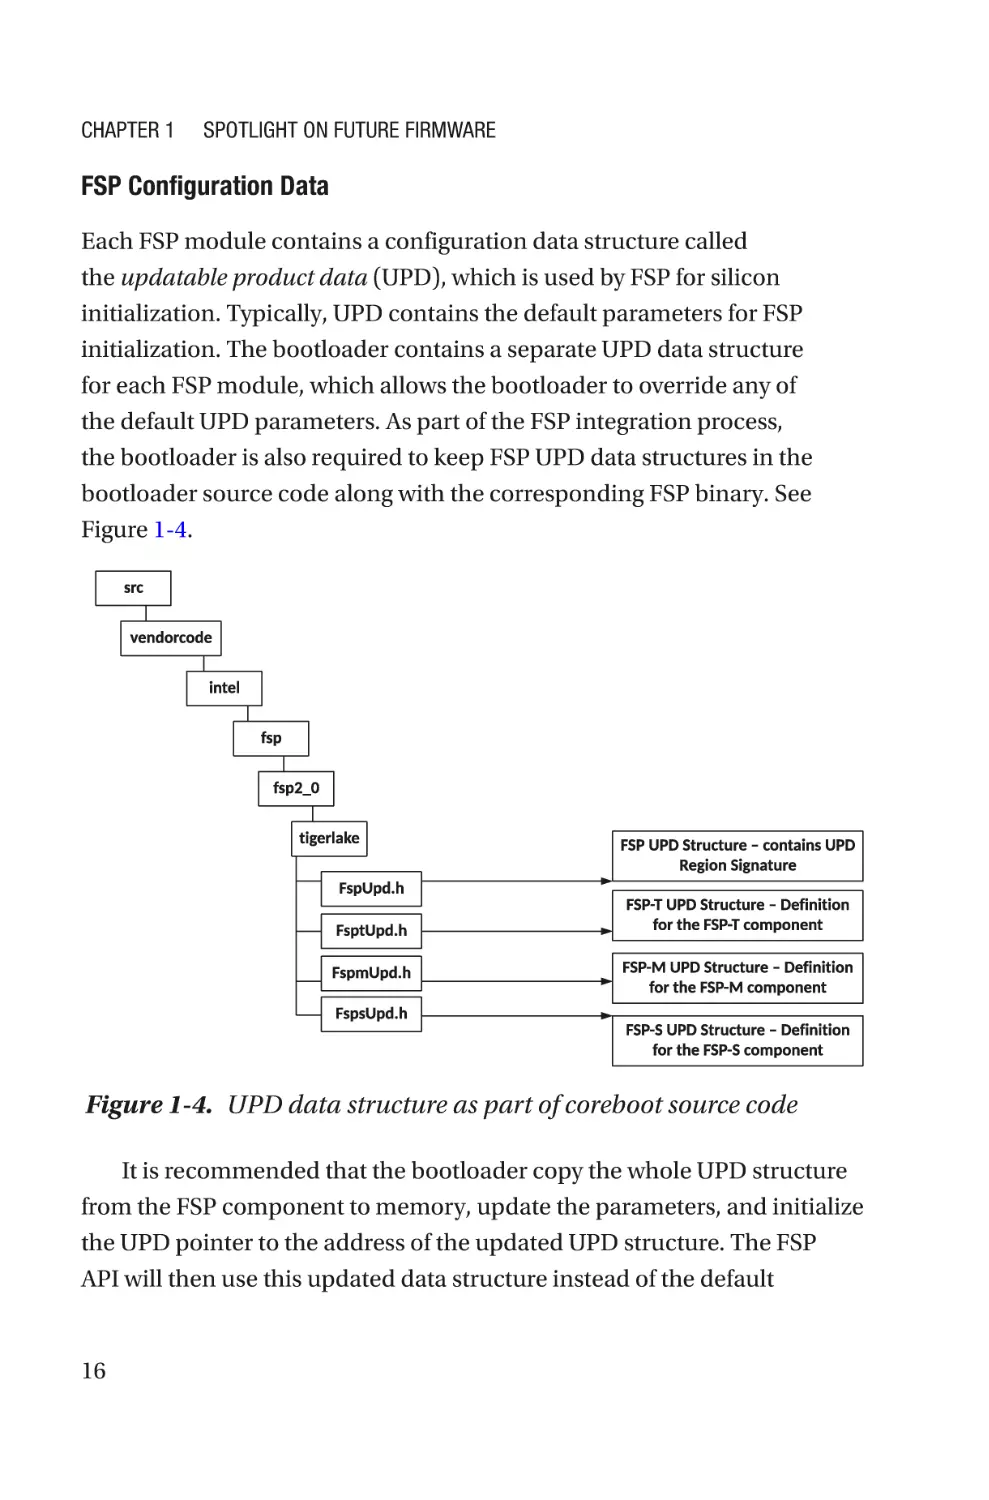 FSP Configuration Data